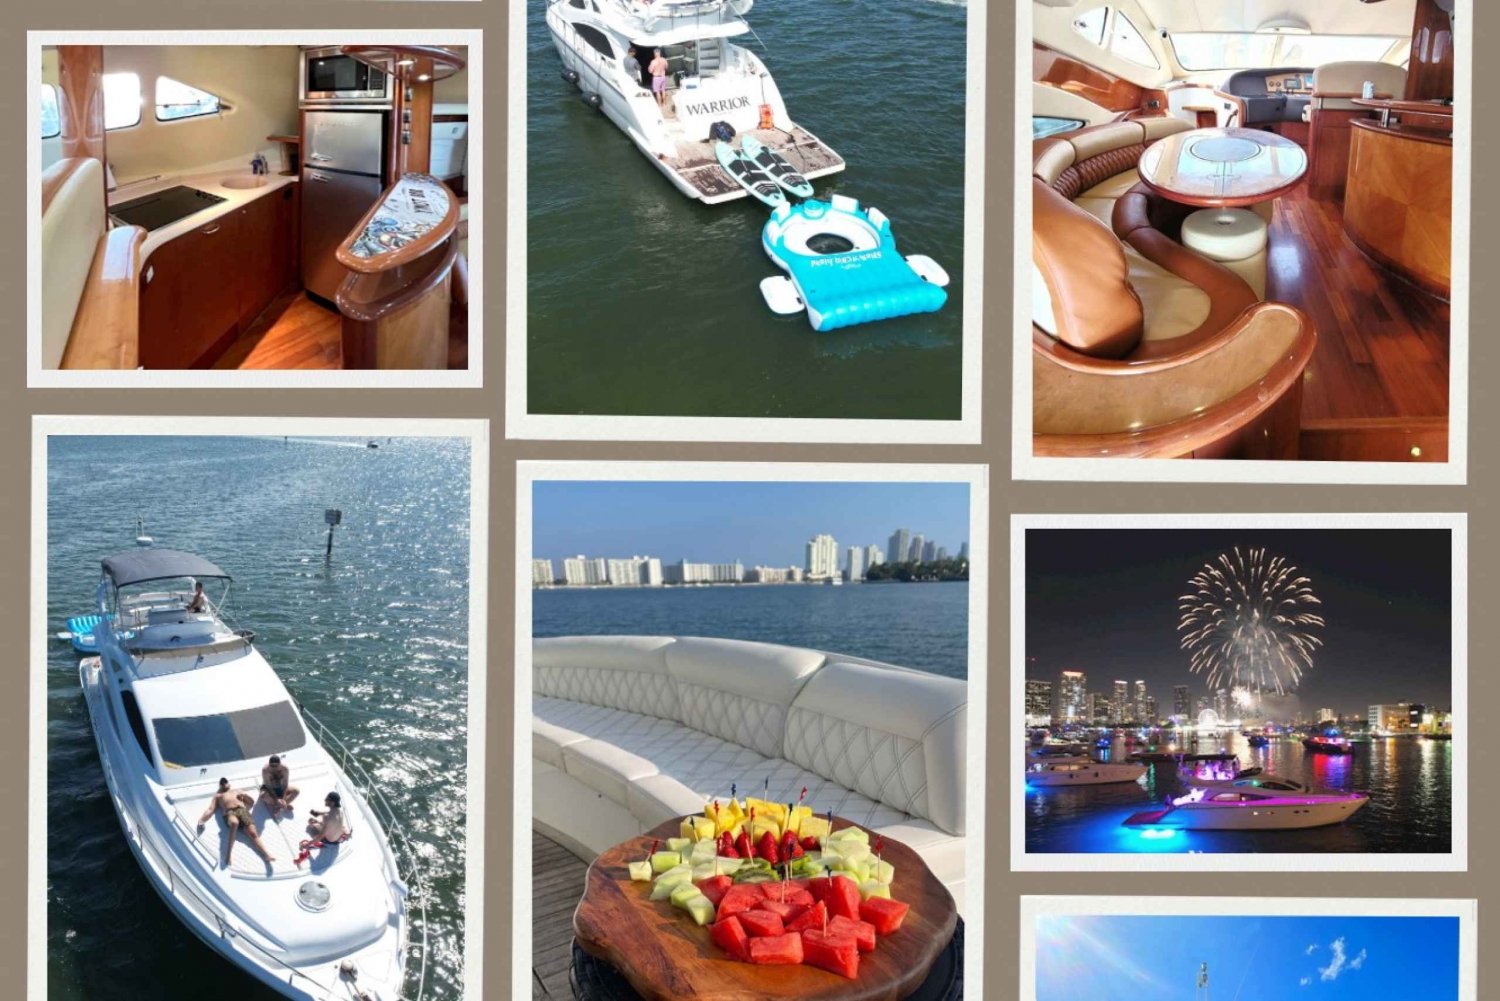 Location de yacht à Miami avec Jetski, paddleboards, structures gonflables